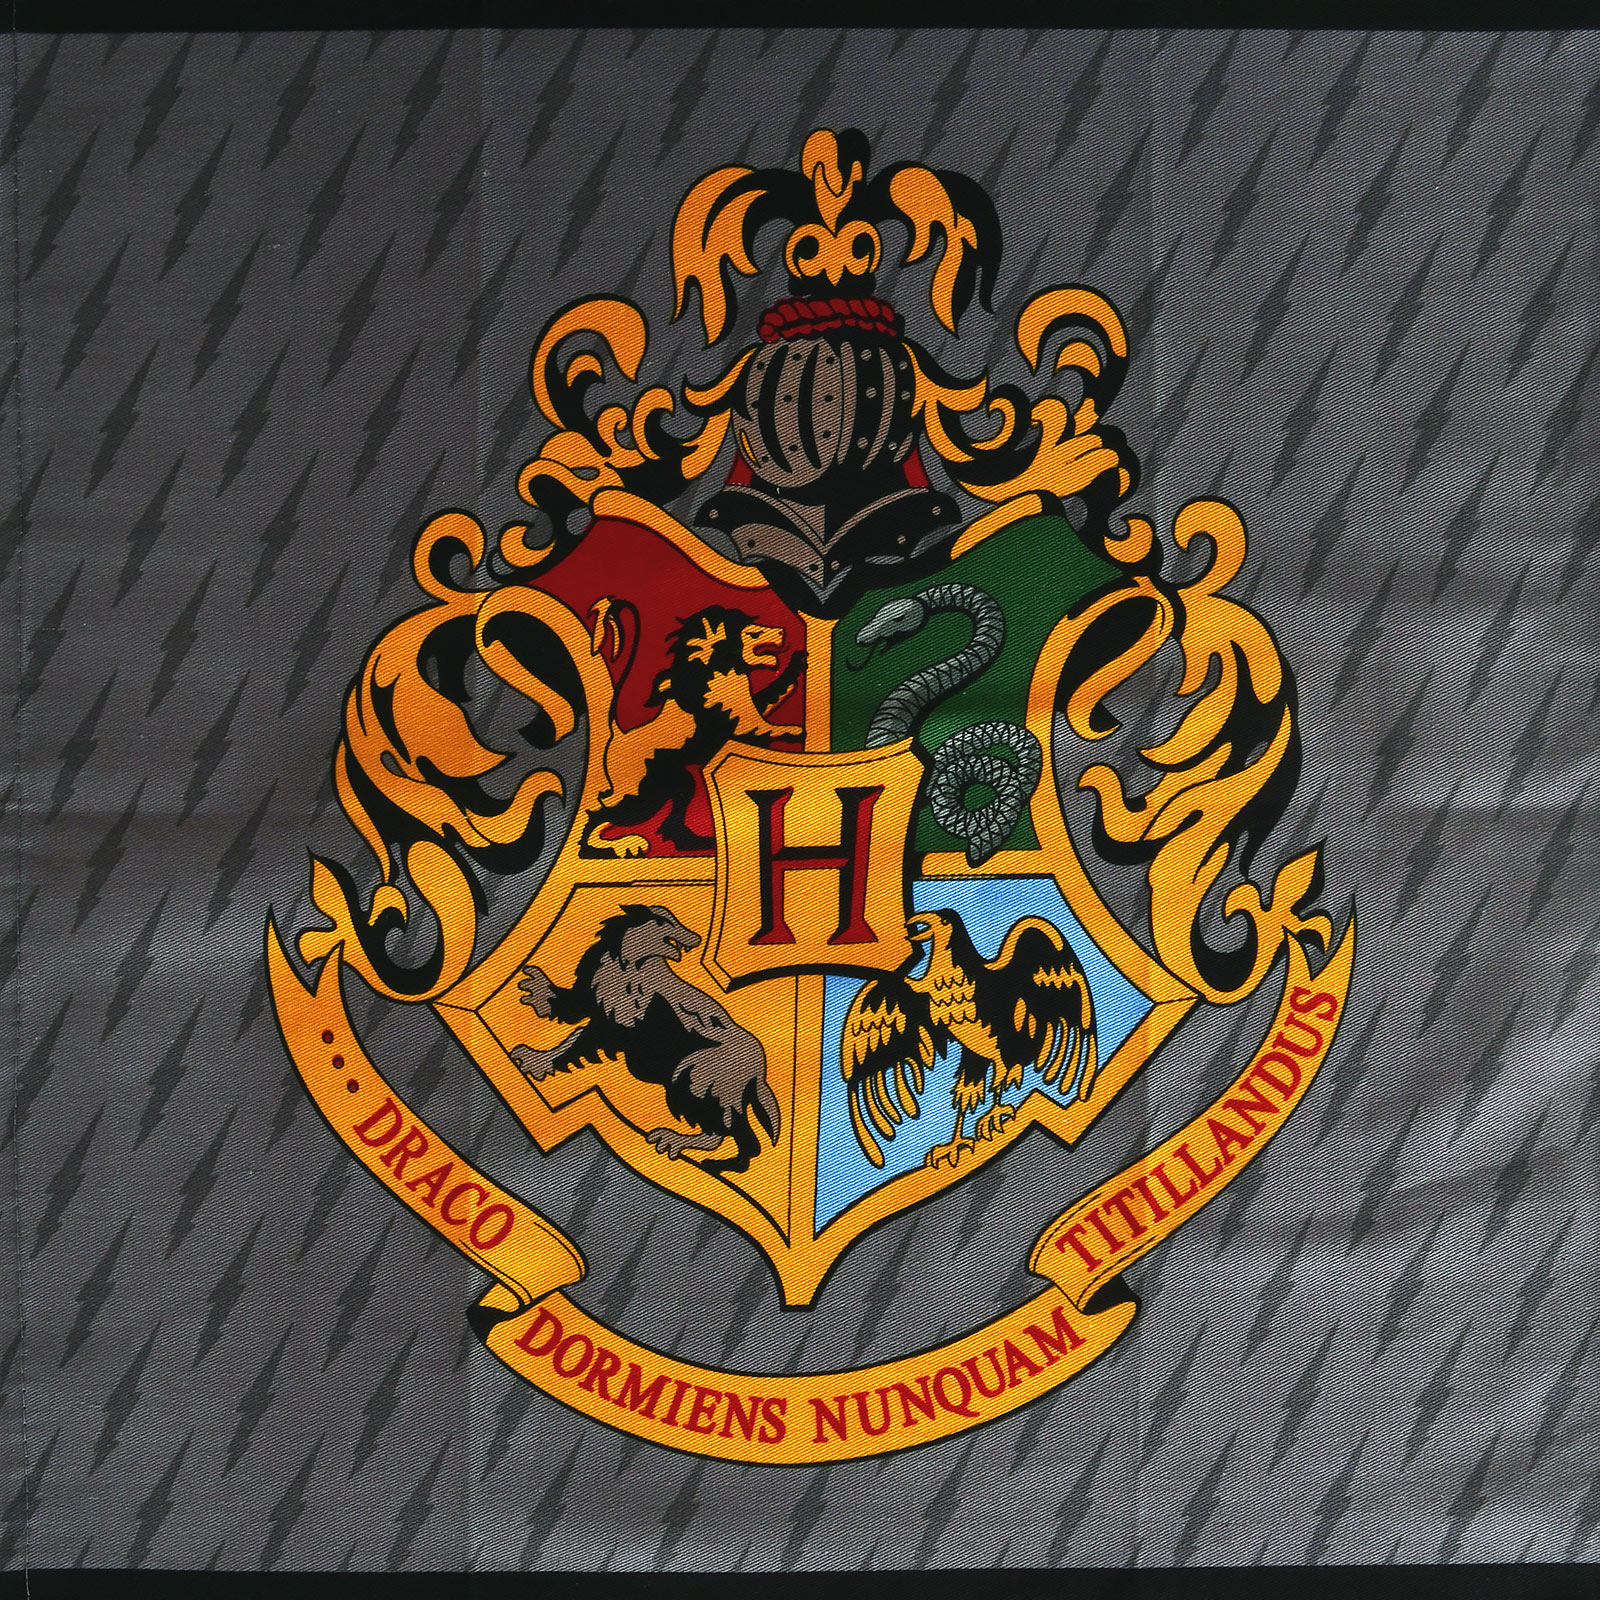 Harry Potter - Slytherin & Hogwarts Dish Towel Set